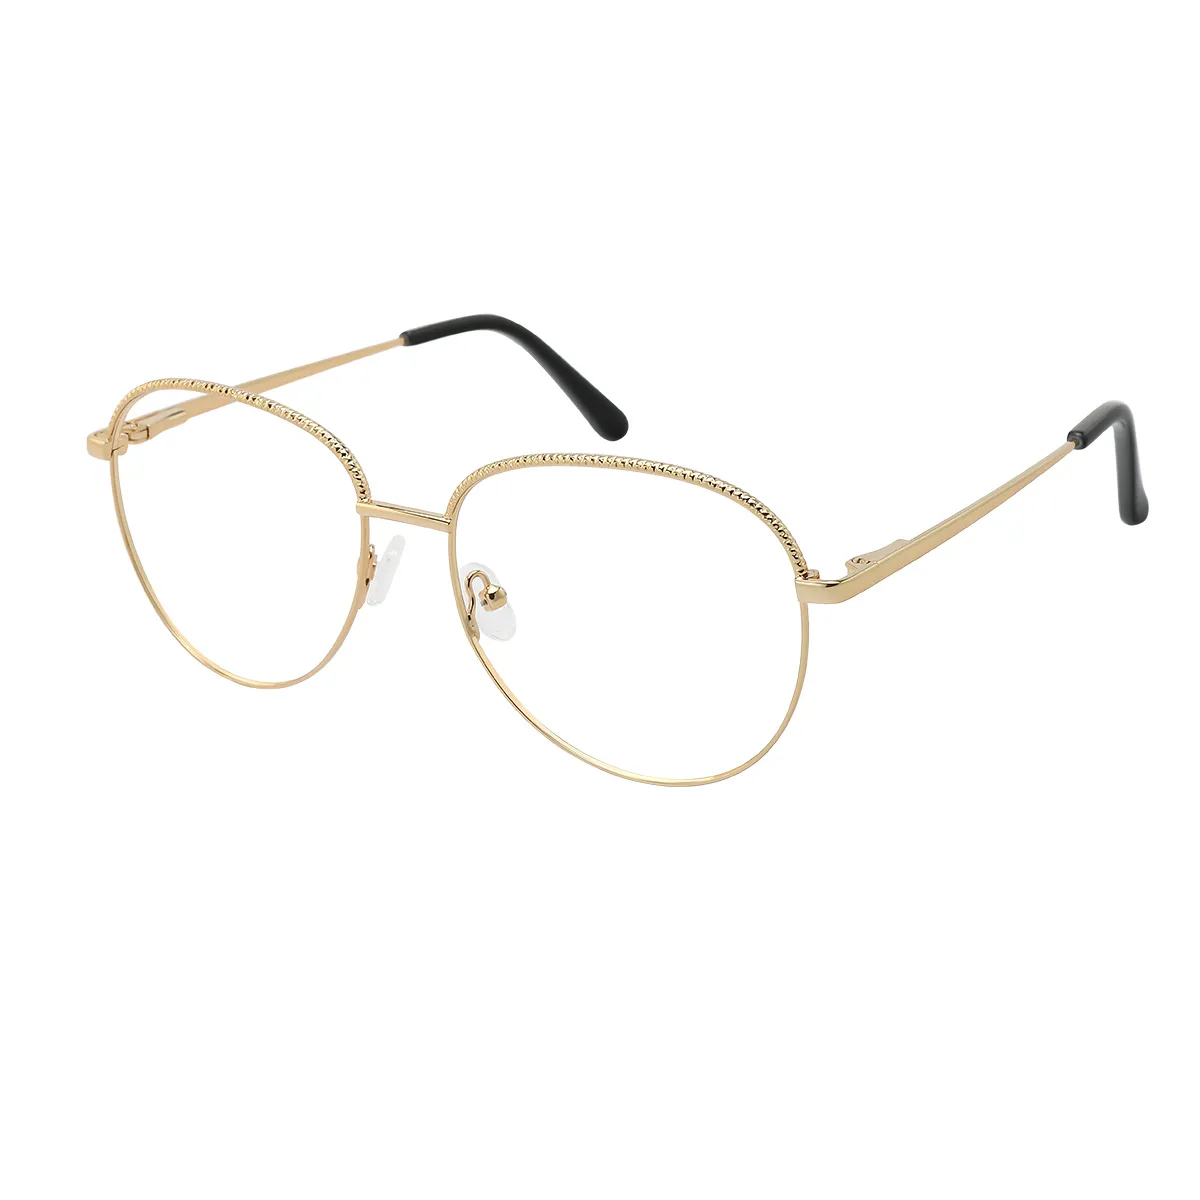 Fashion Round Gold/Black Eyeglasses for Women